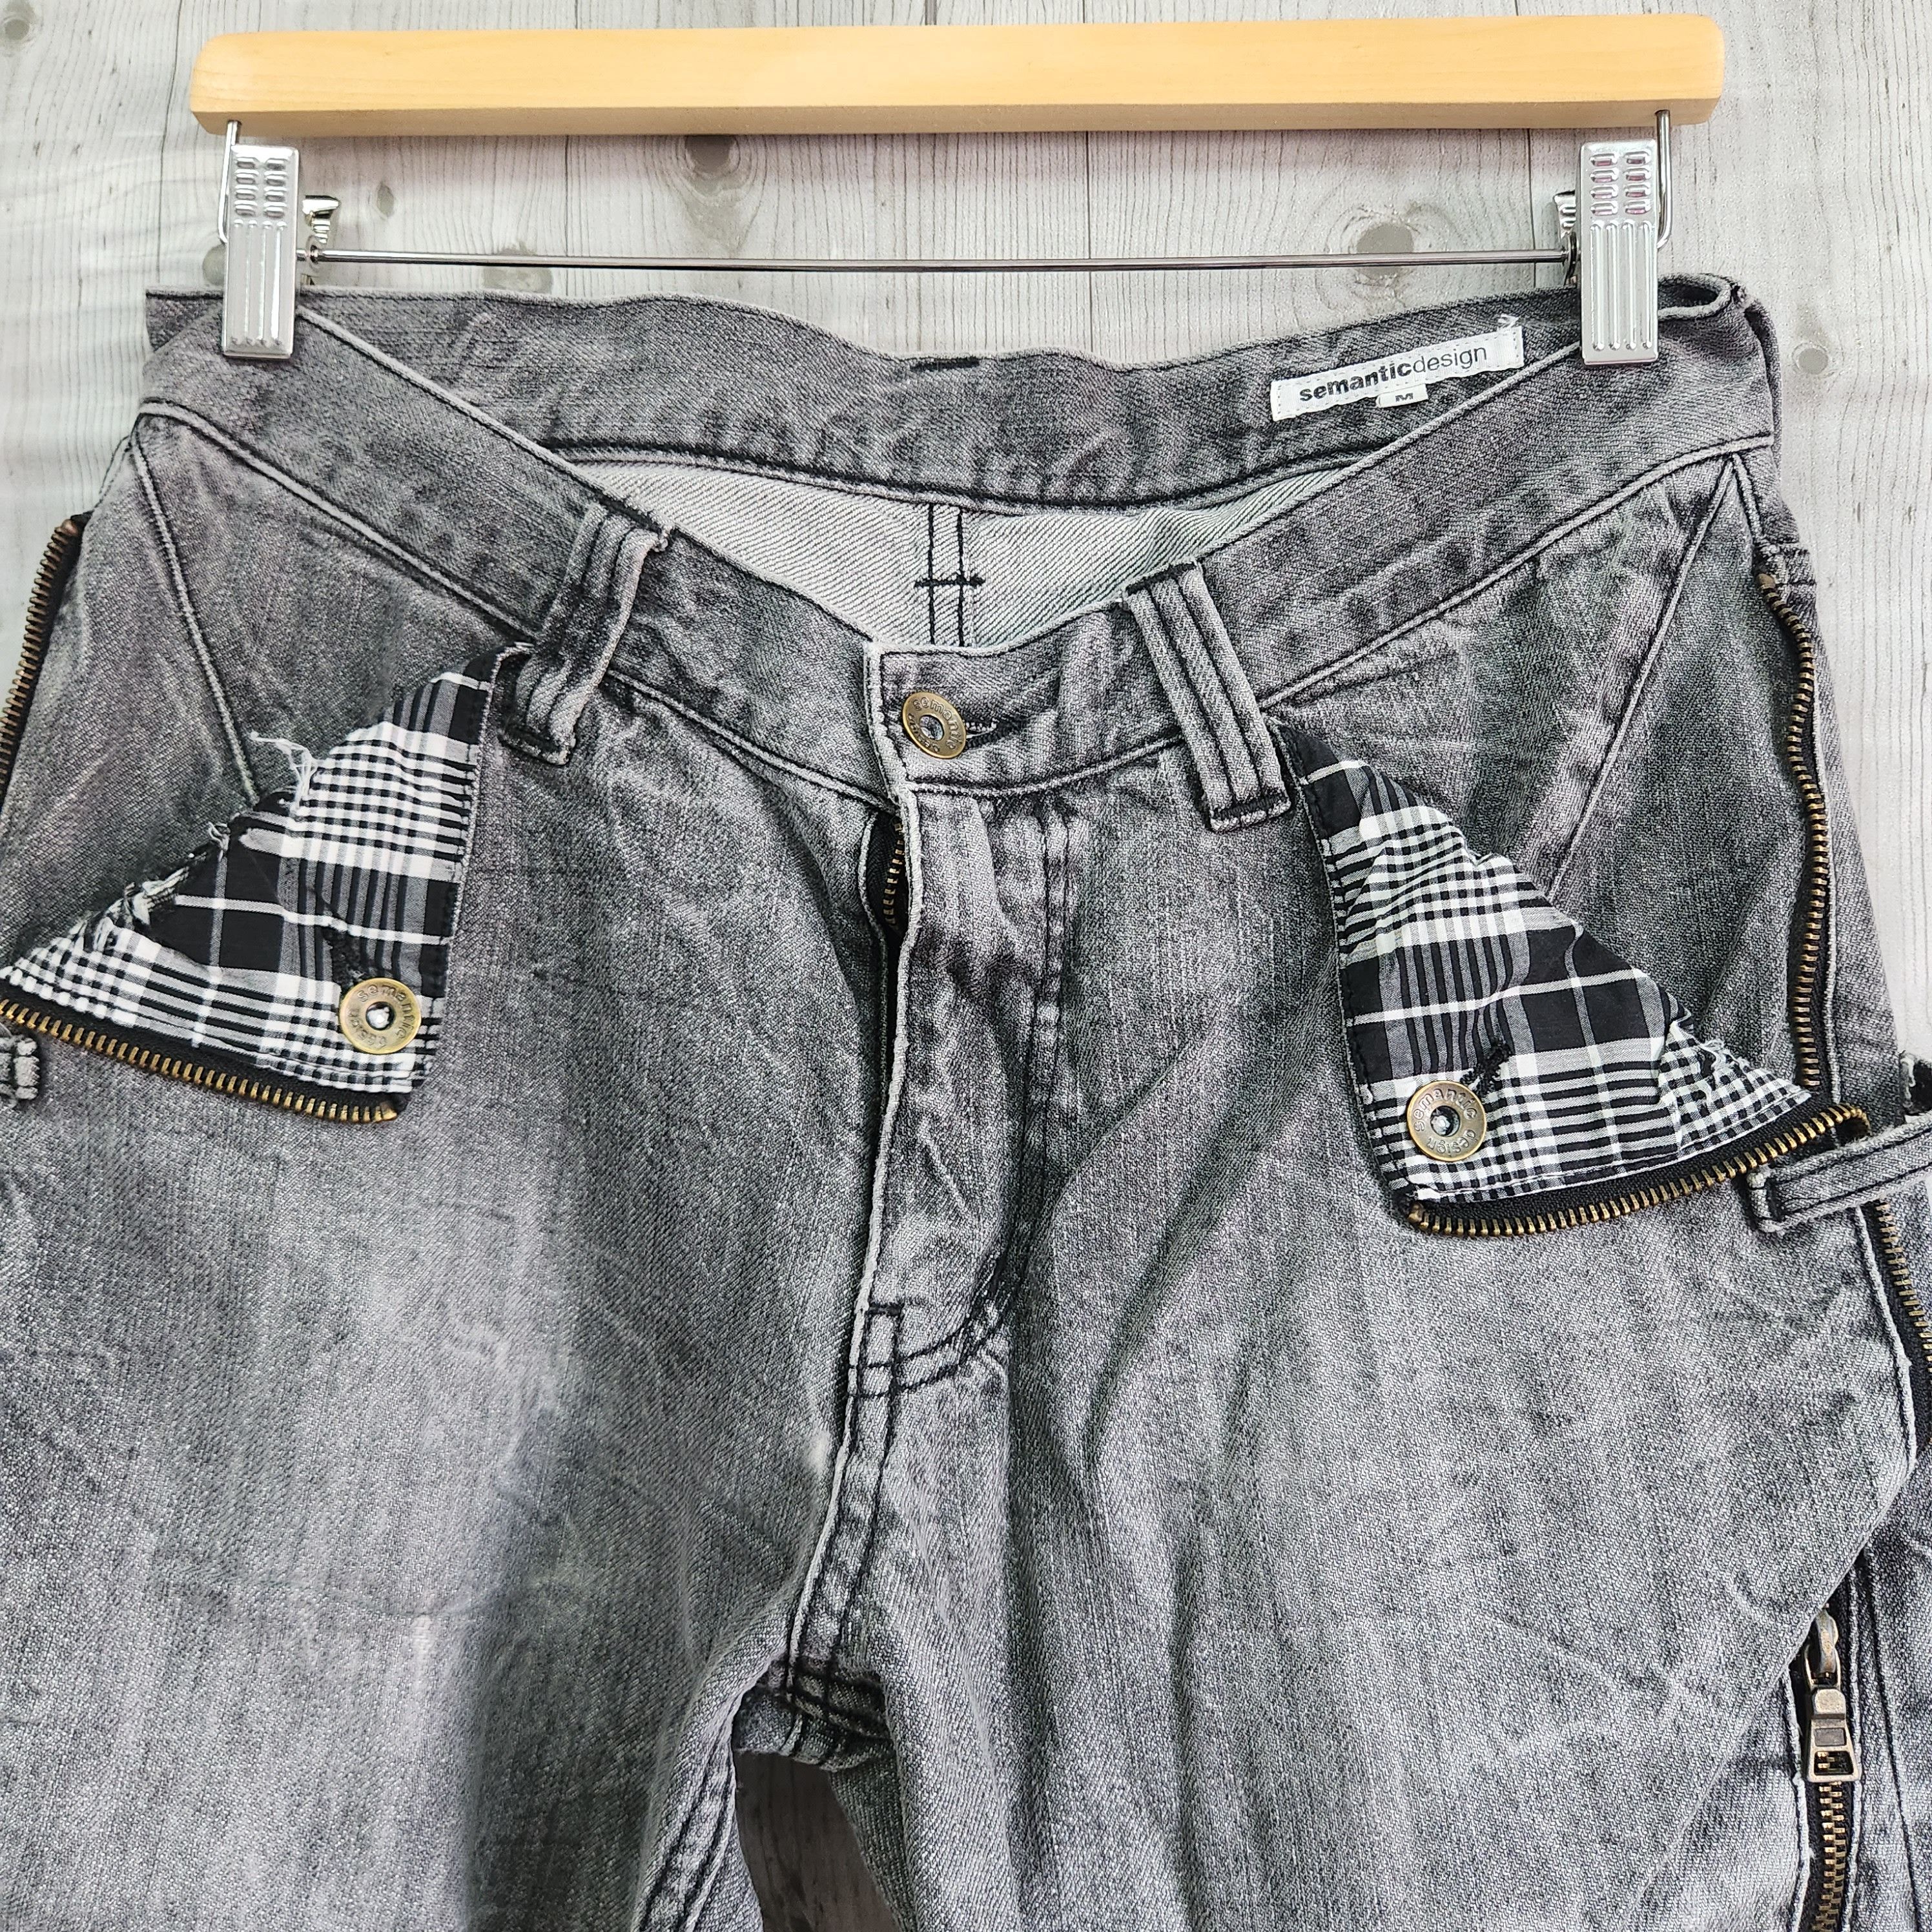 Semantic Design Hysteric Glamour Japan Denim Jeans - 19